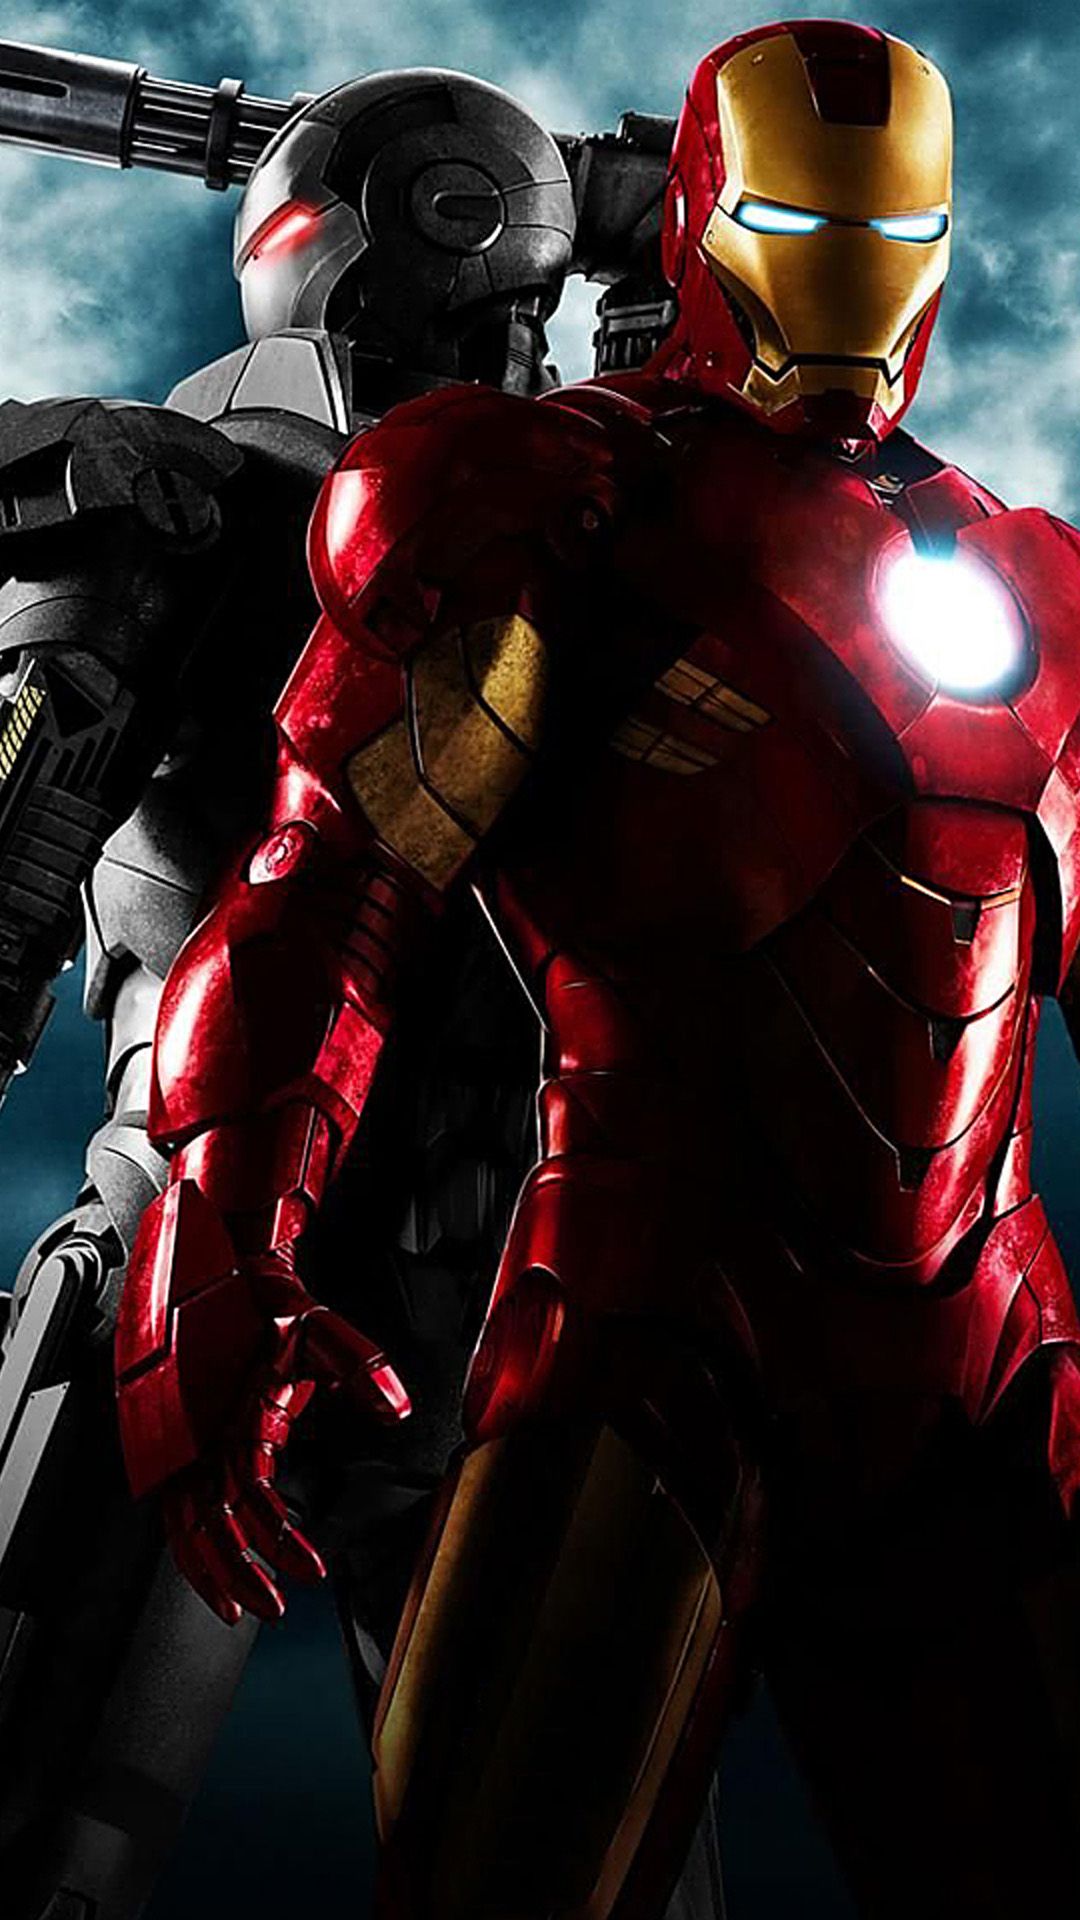 Toy Iron Man Mecha Live Wallpaper - free download